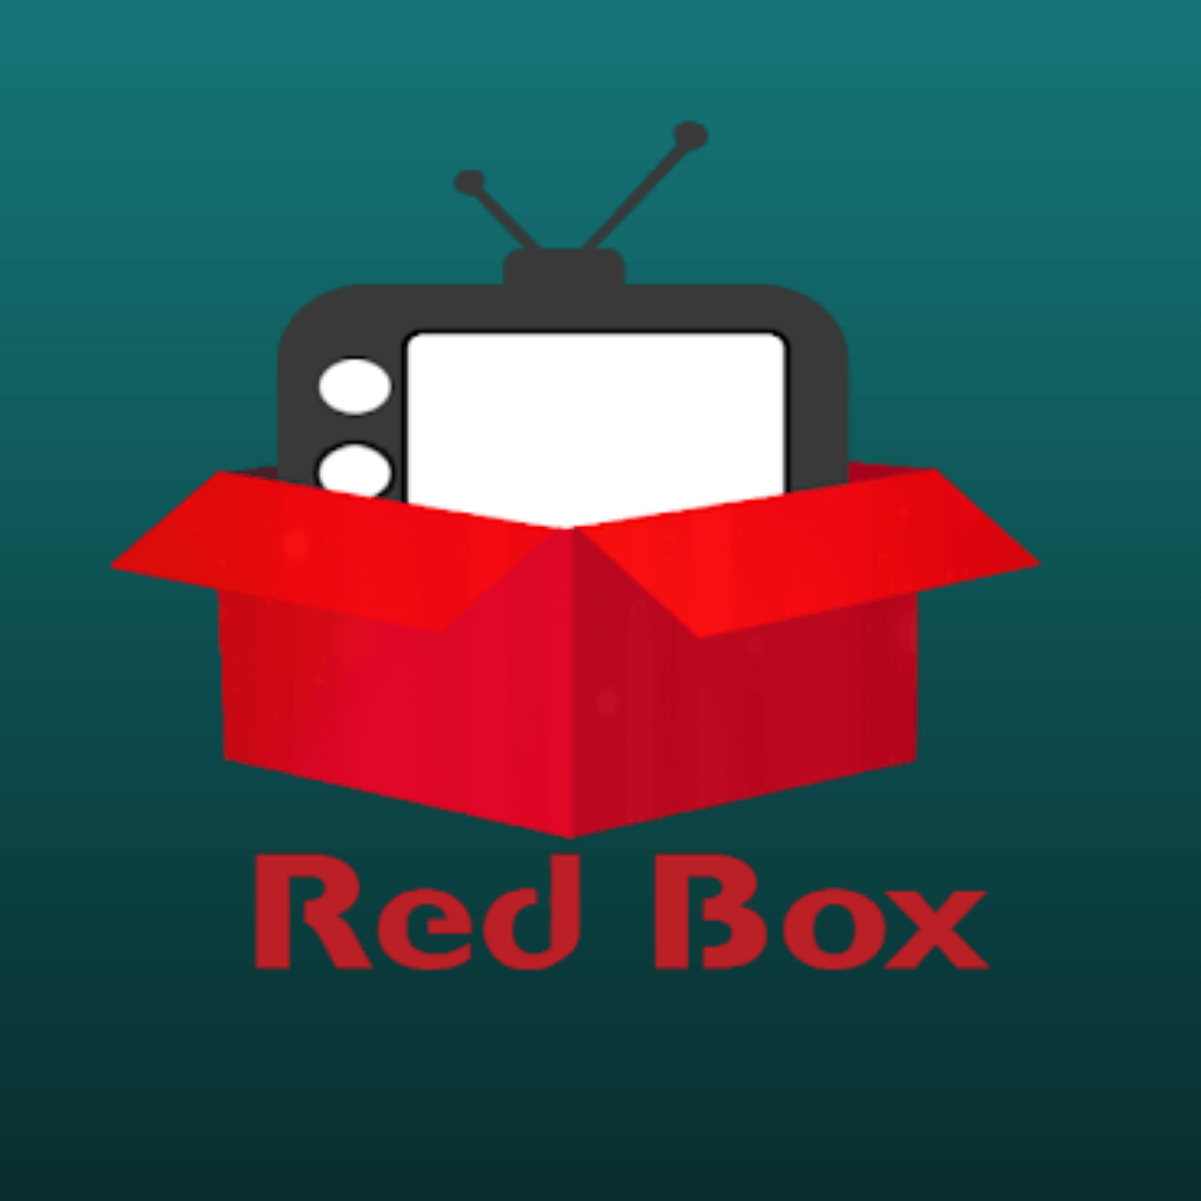 redbox tv apk free download for windows